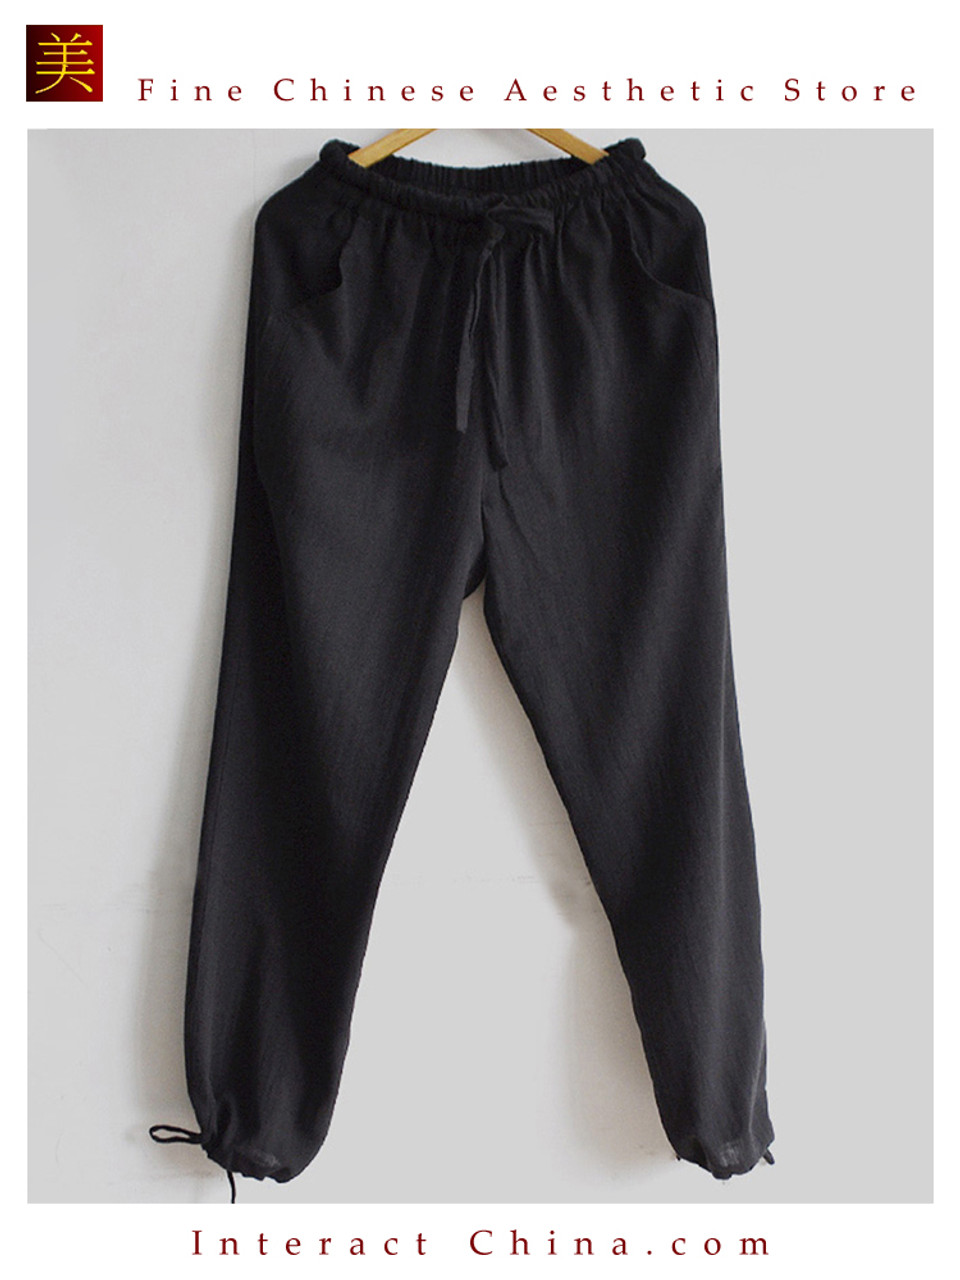 Freya Flare Trousers Sewing Pattern Digital PDF Sizes 6-32 | Tammy Handmade